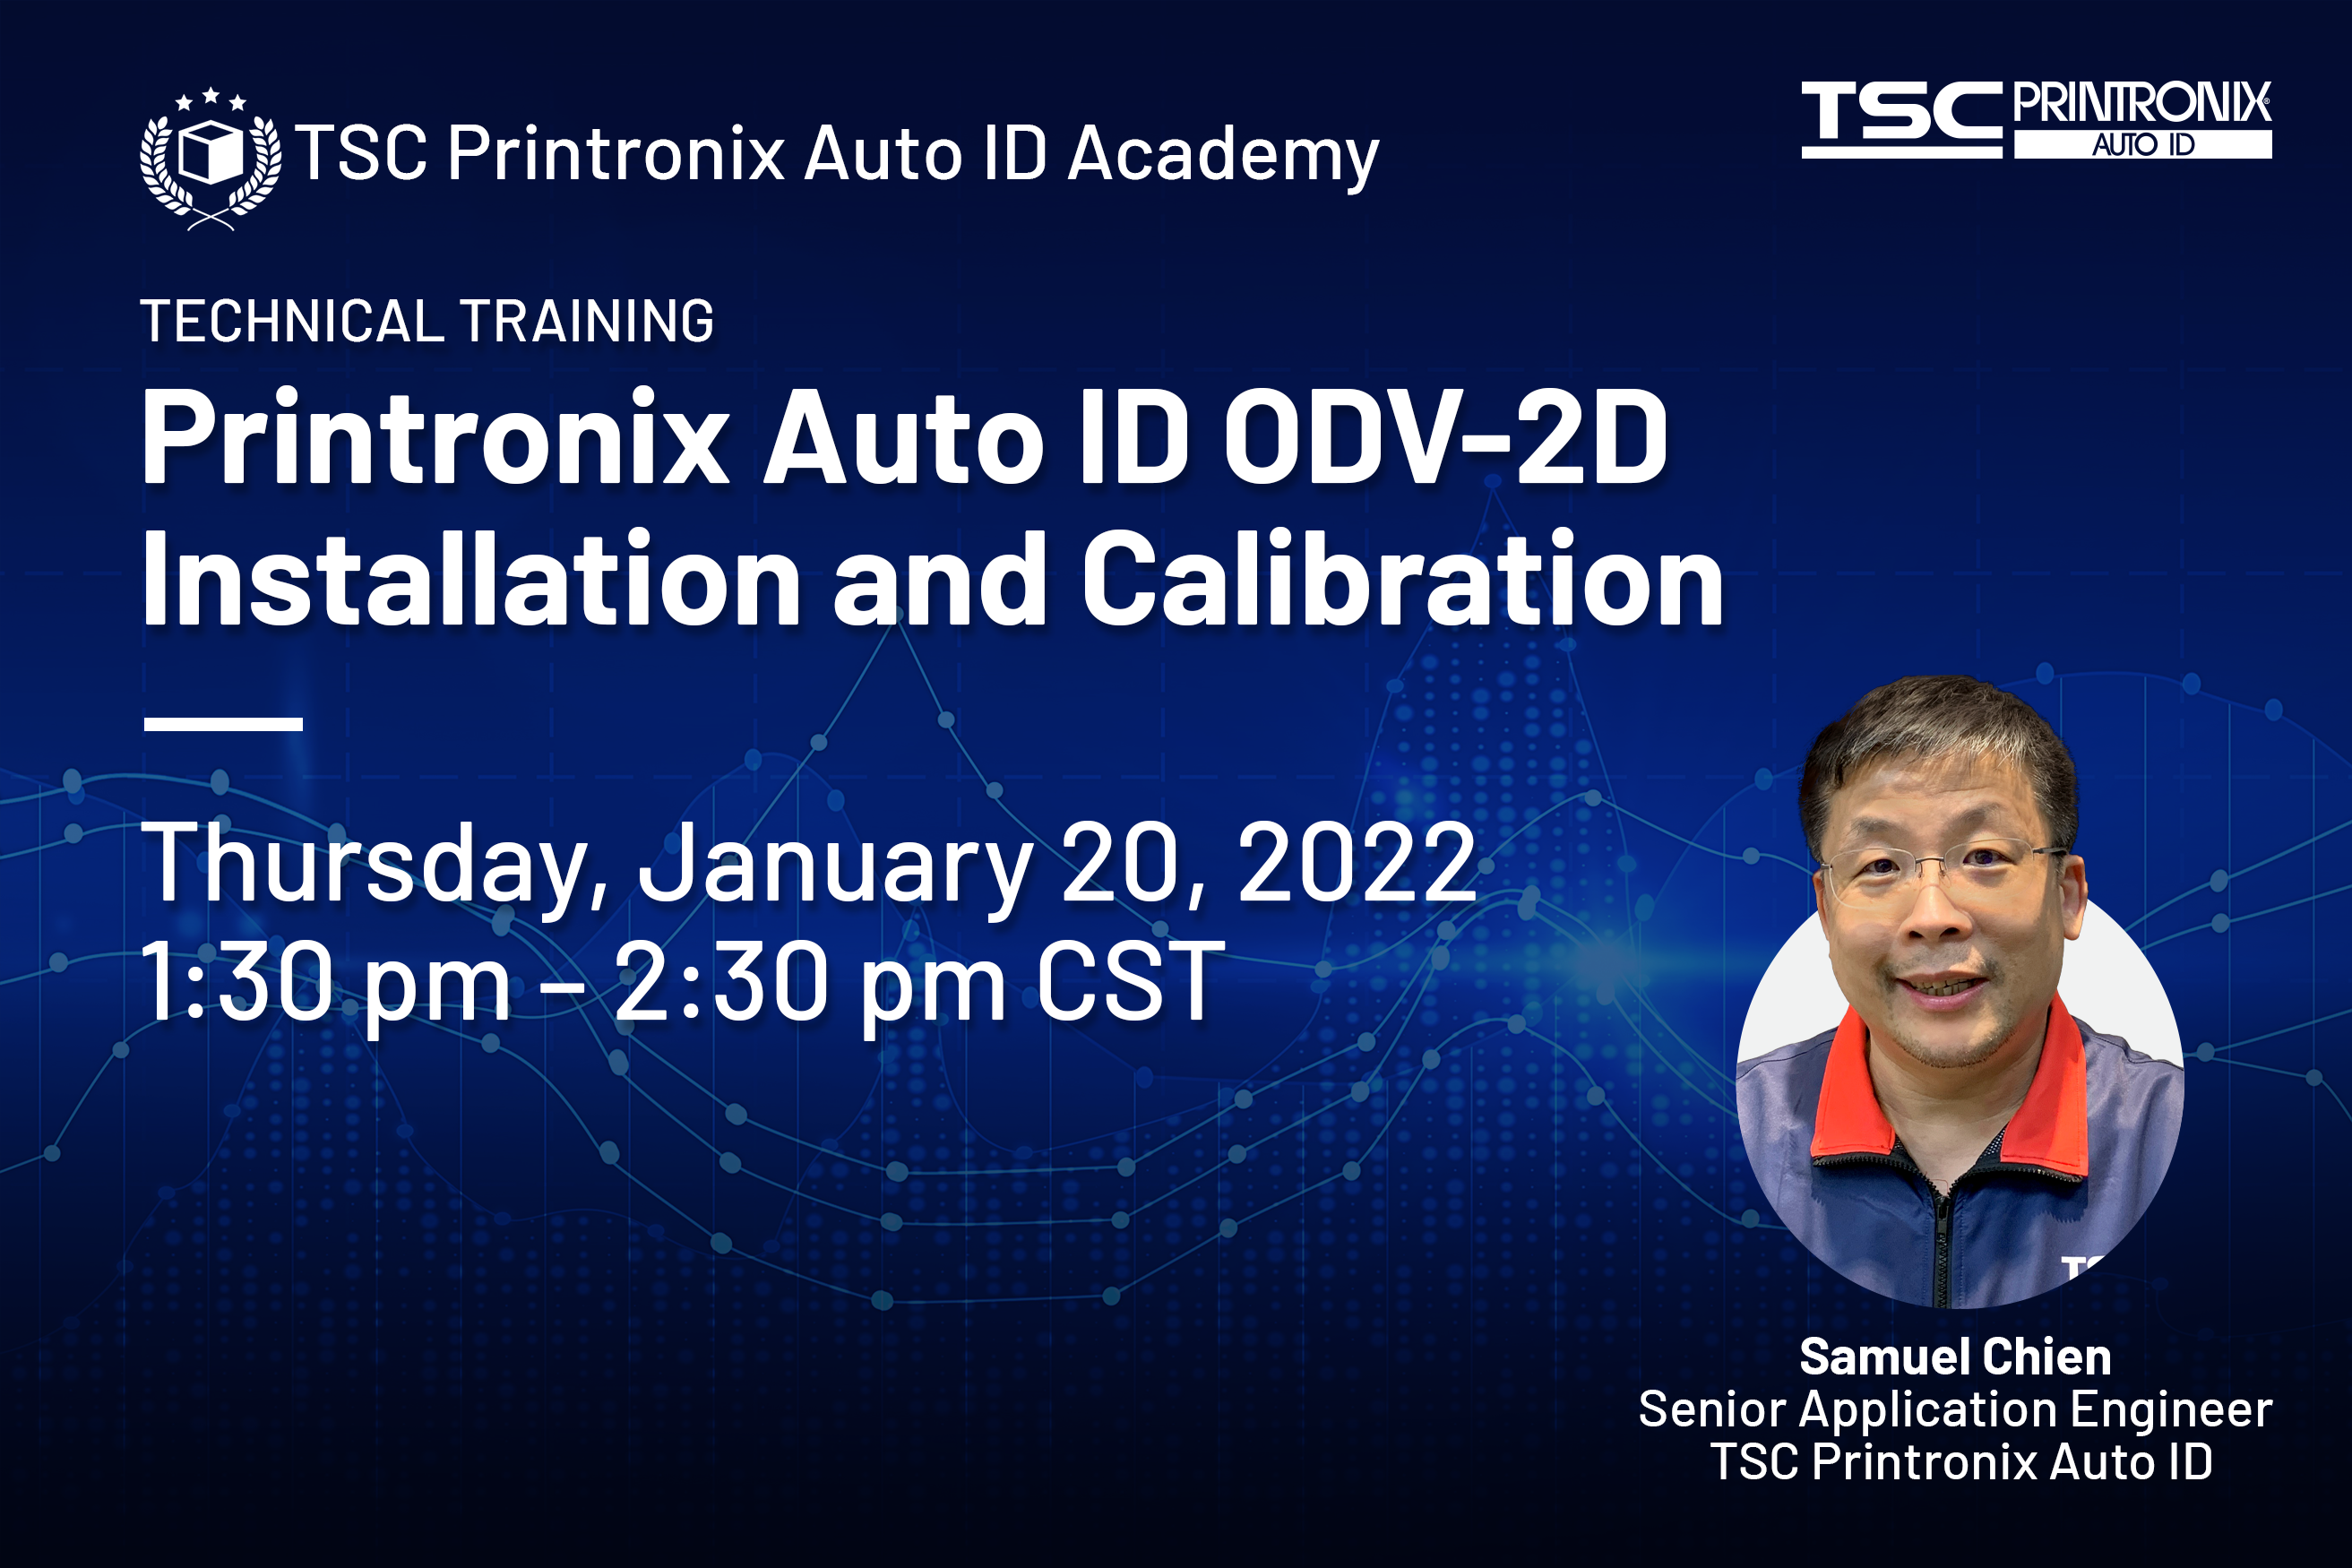 TSC Printronix Auto ID Academy Webinar: Technical Training - Printronix ODV2D Installation and Calibration